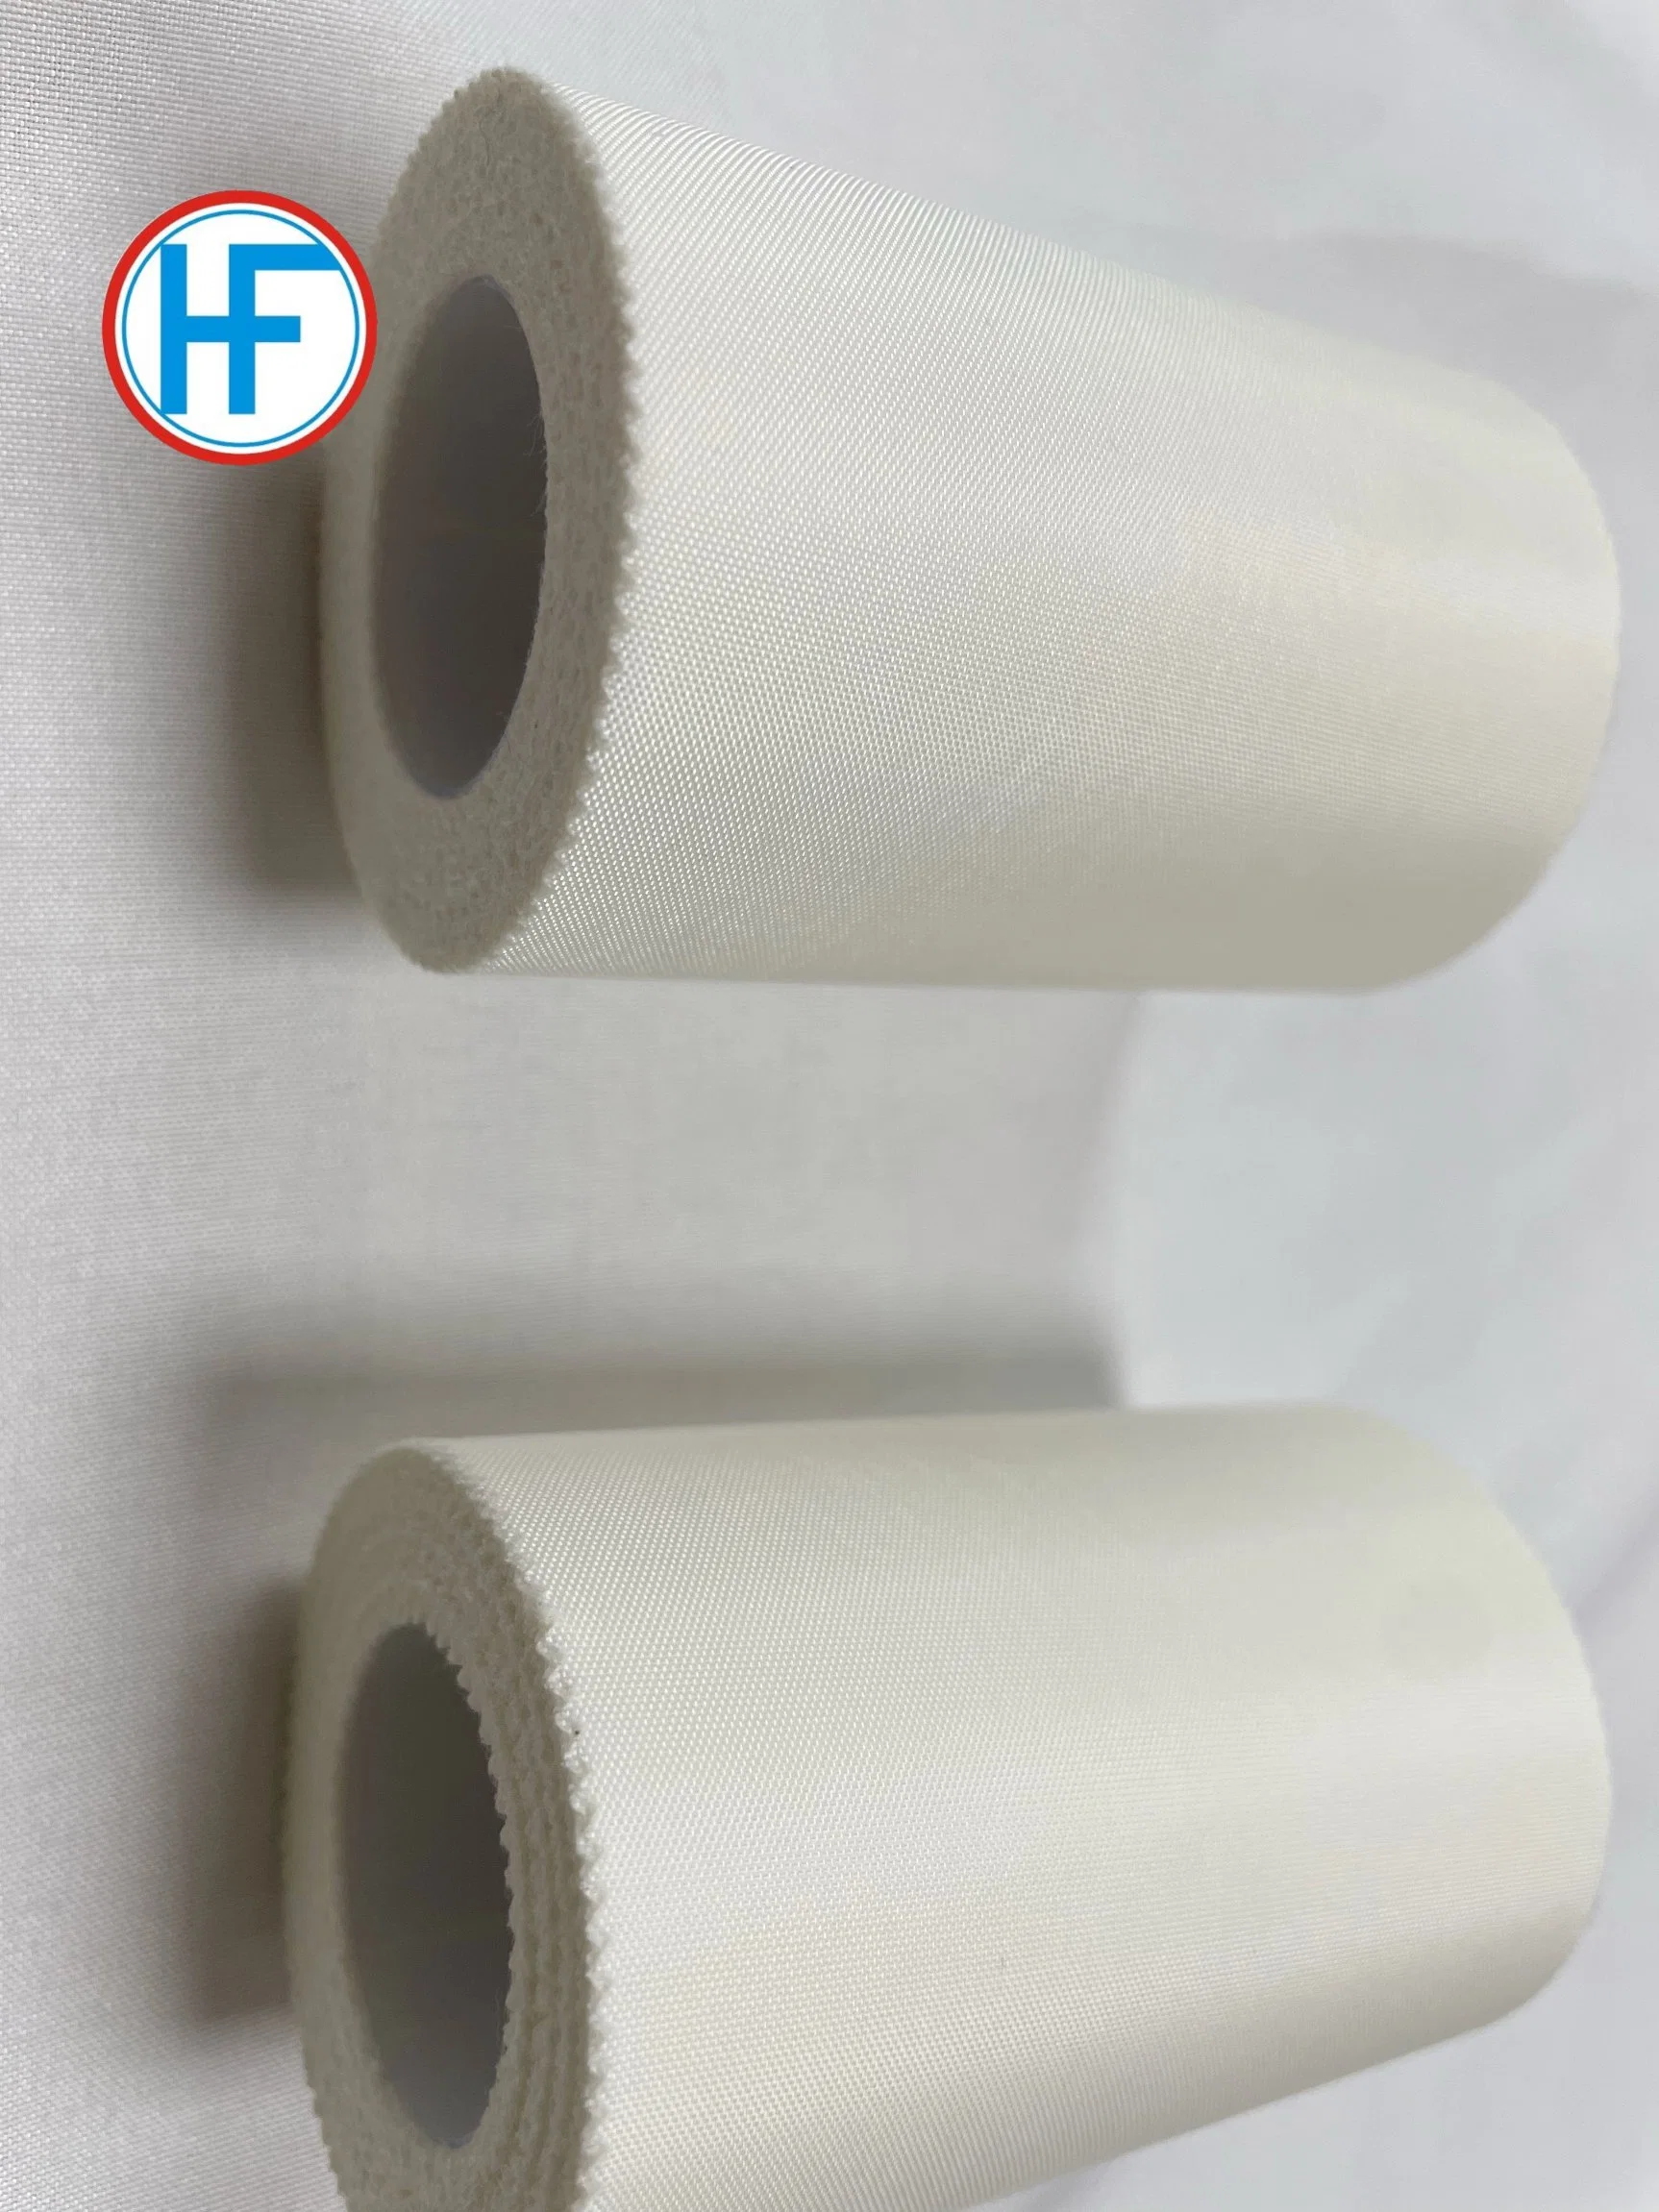 First Aid Adhesive Silk Cloth Tape- Latex Free